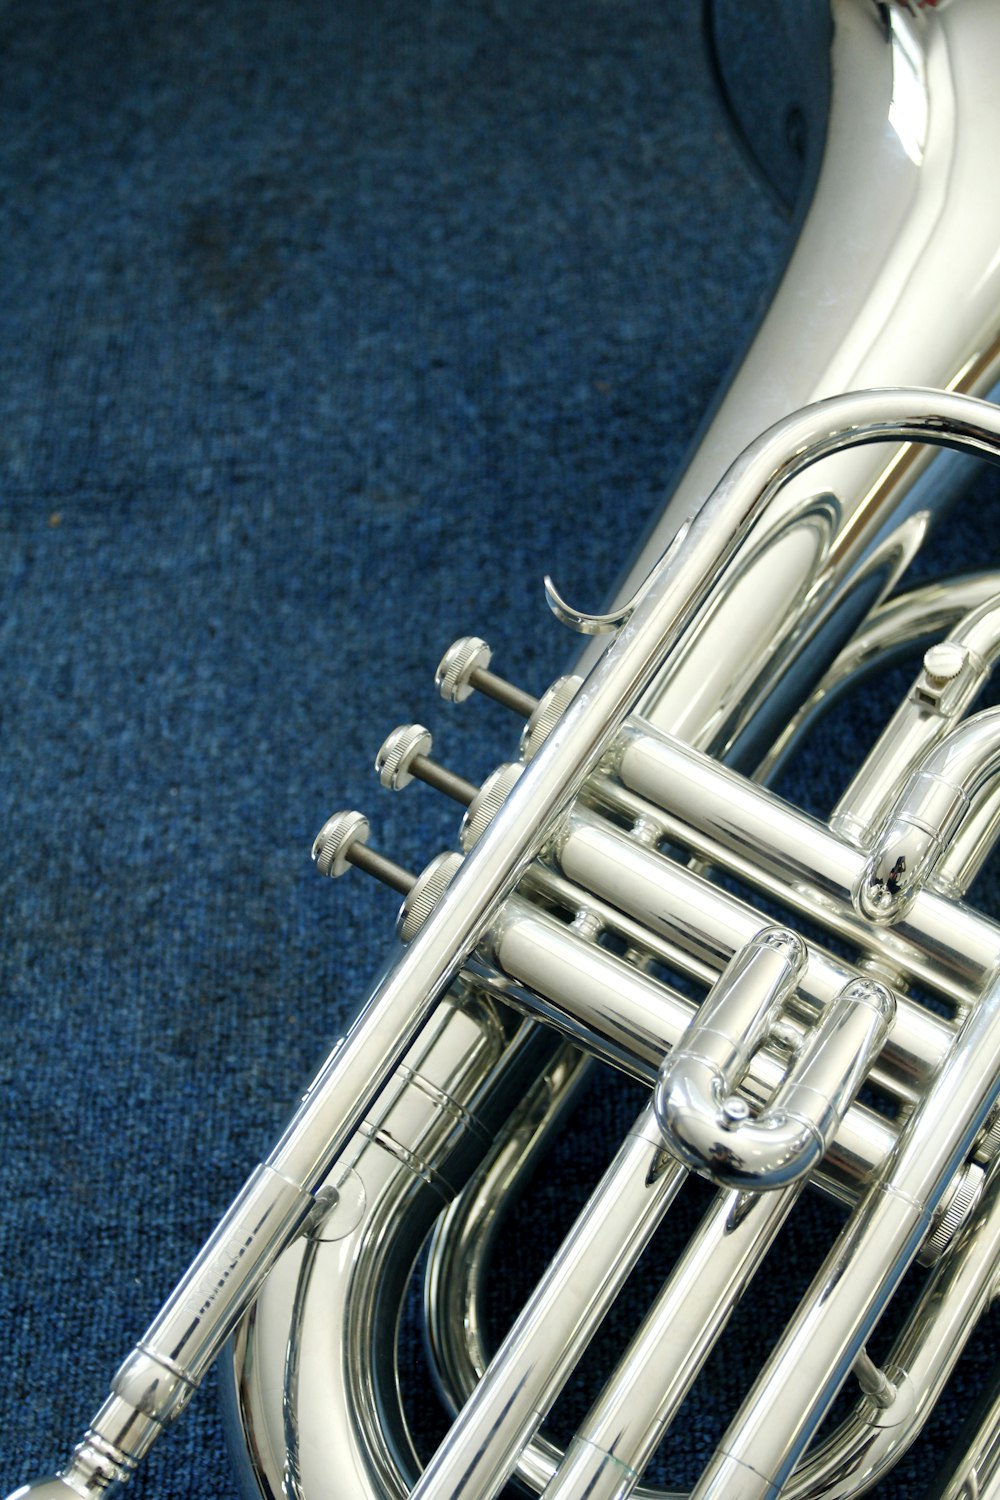 a close up of a trumpet on a blue carpet